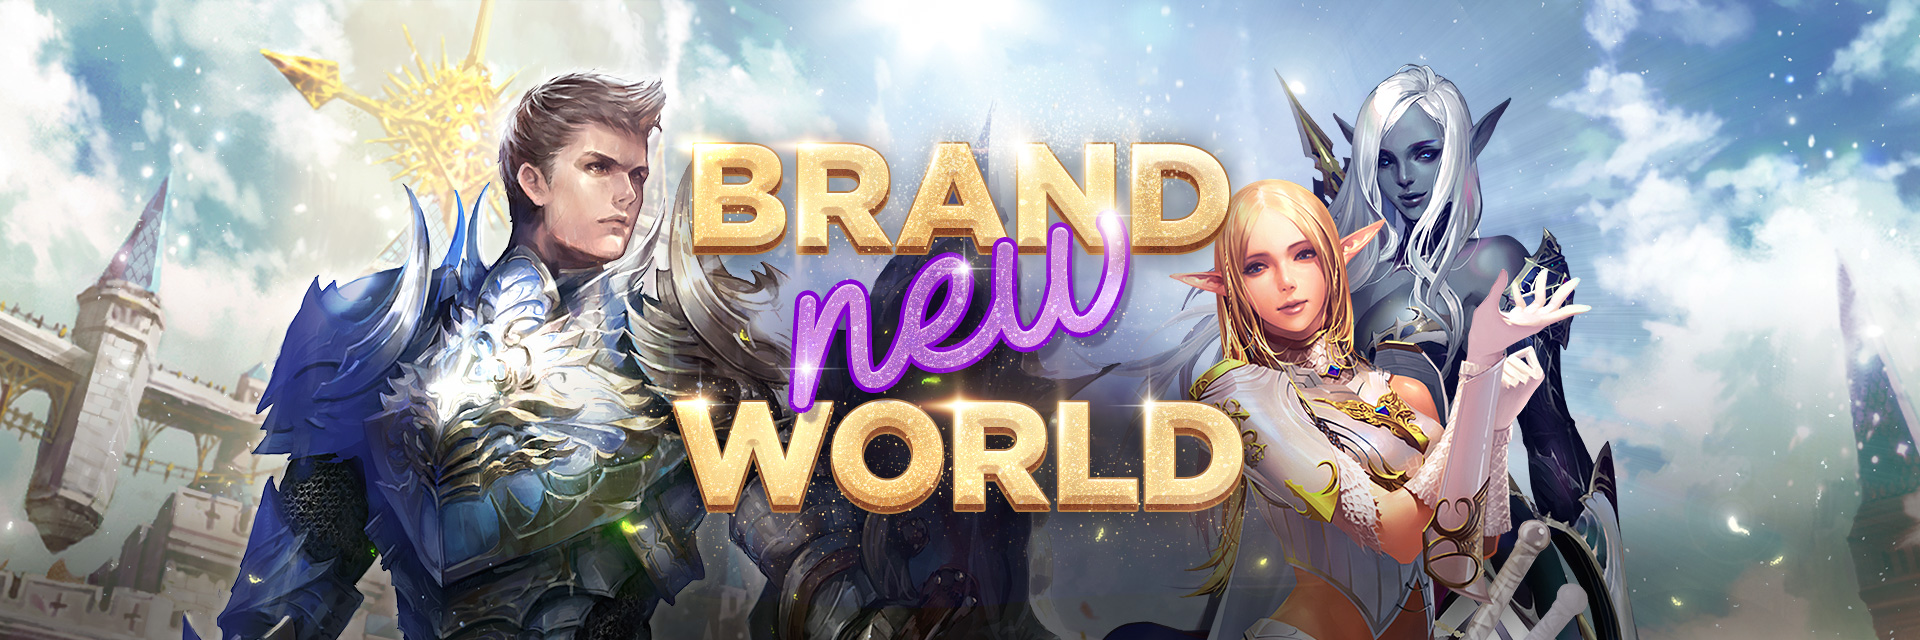 BRAND NEW WORLD